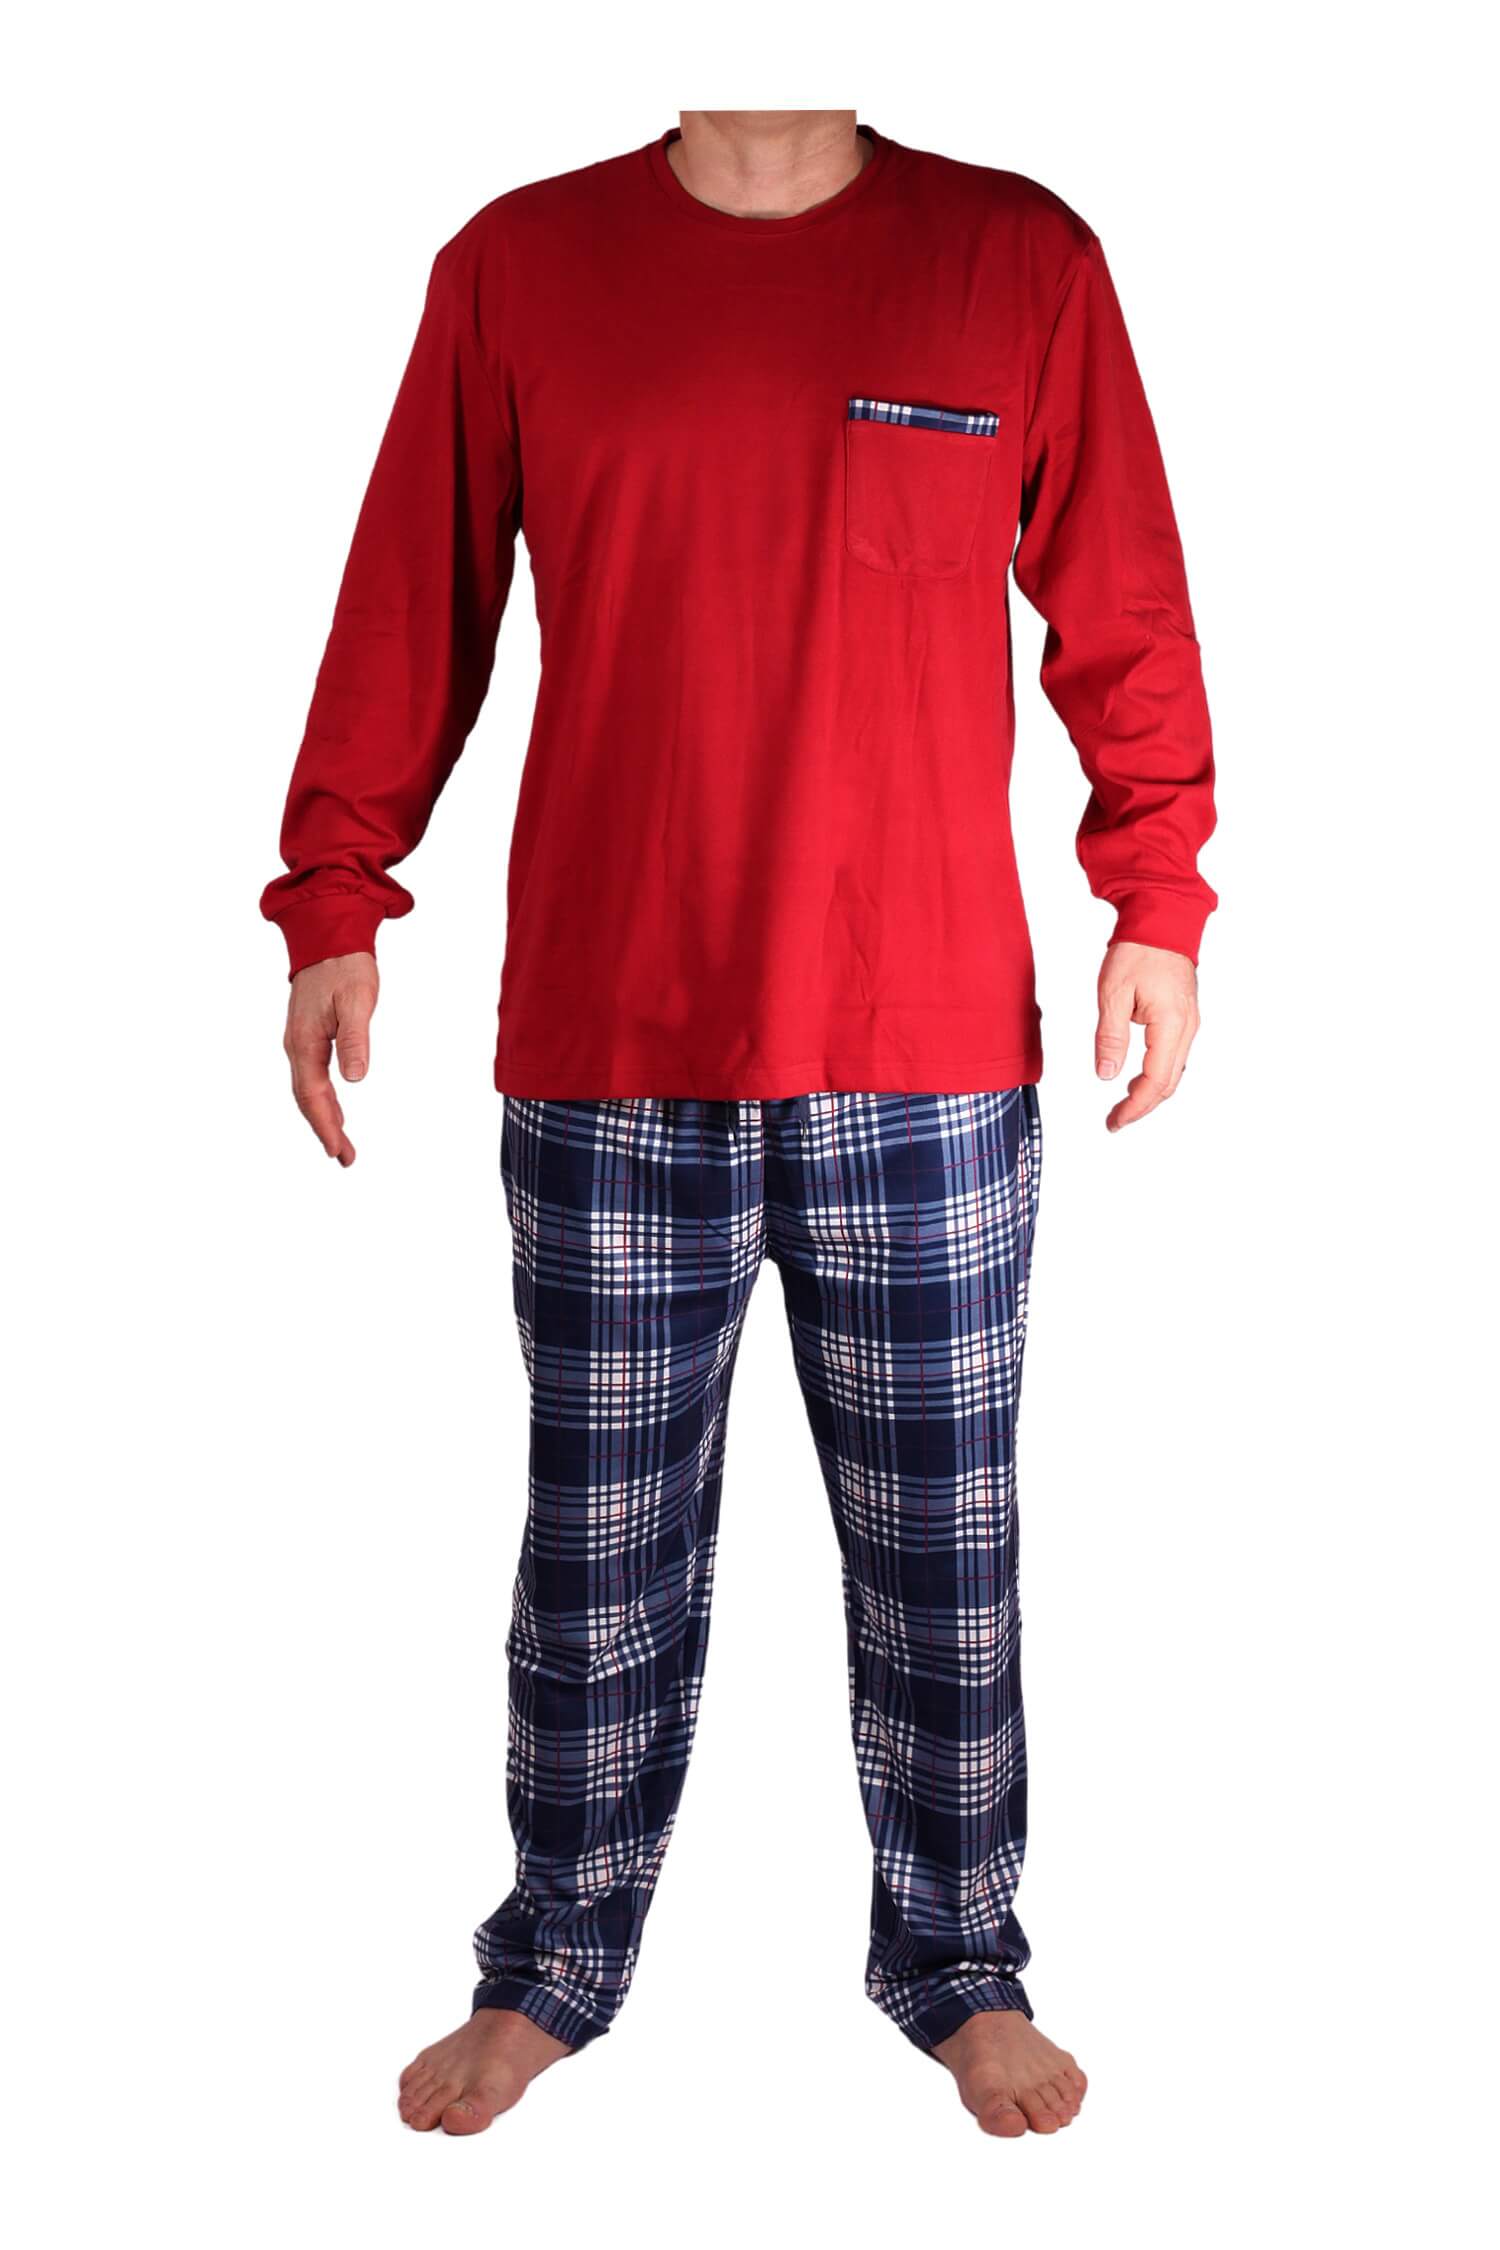 Zdenda Lux pánské pyžamo s flísem XL červená